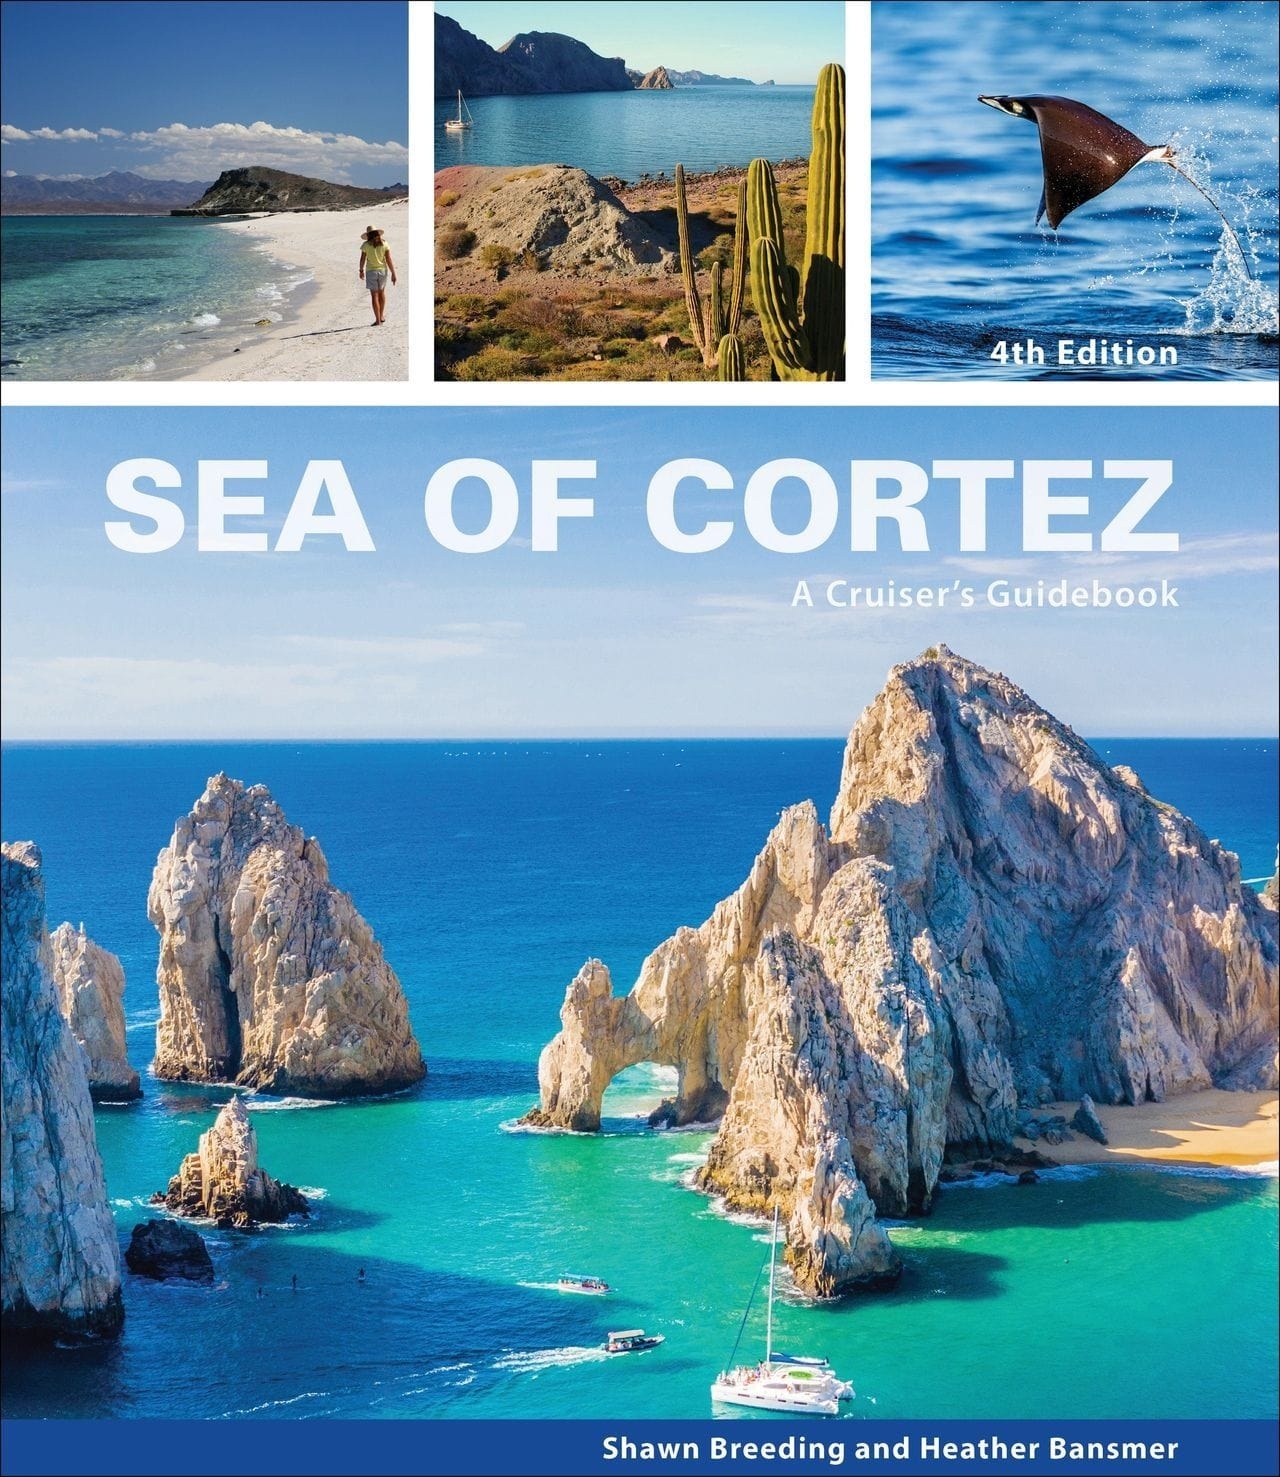 Sea of Cortez "A Cruiser's Guidebook"